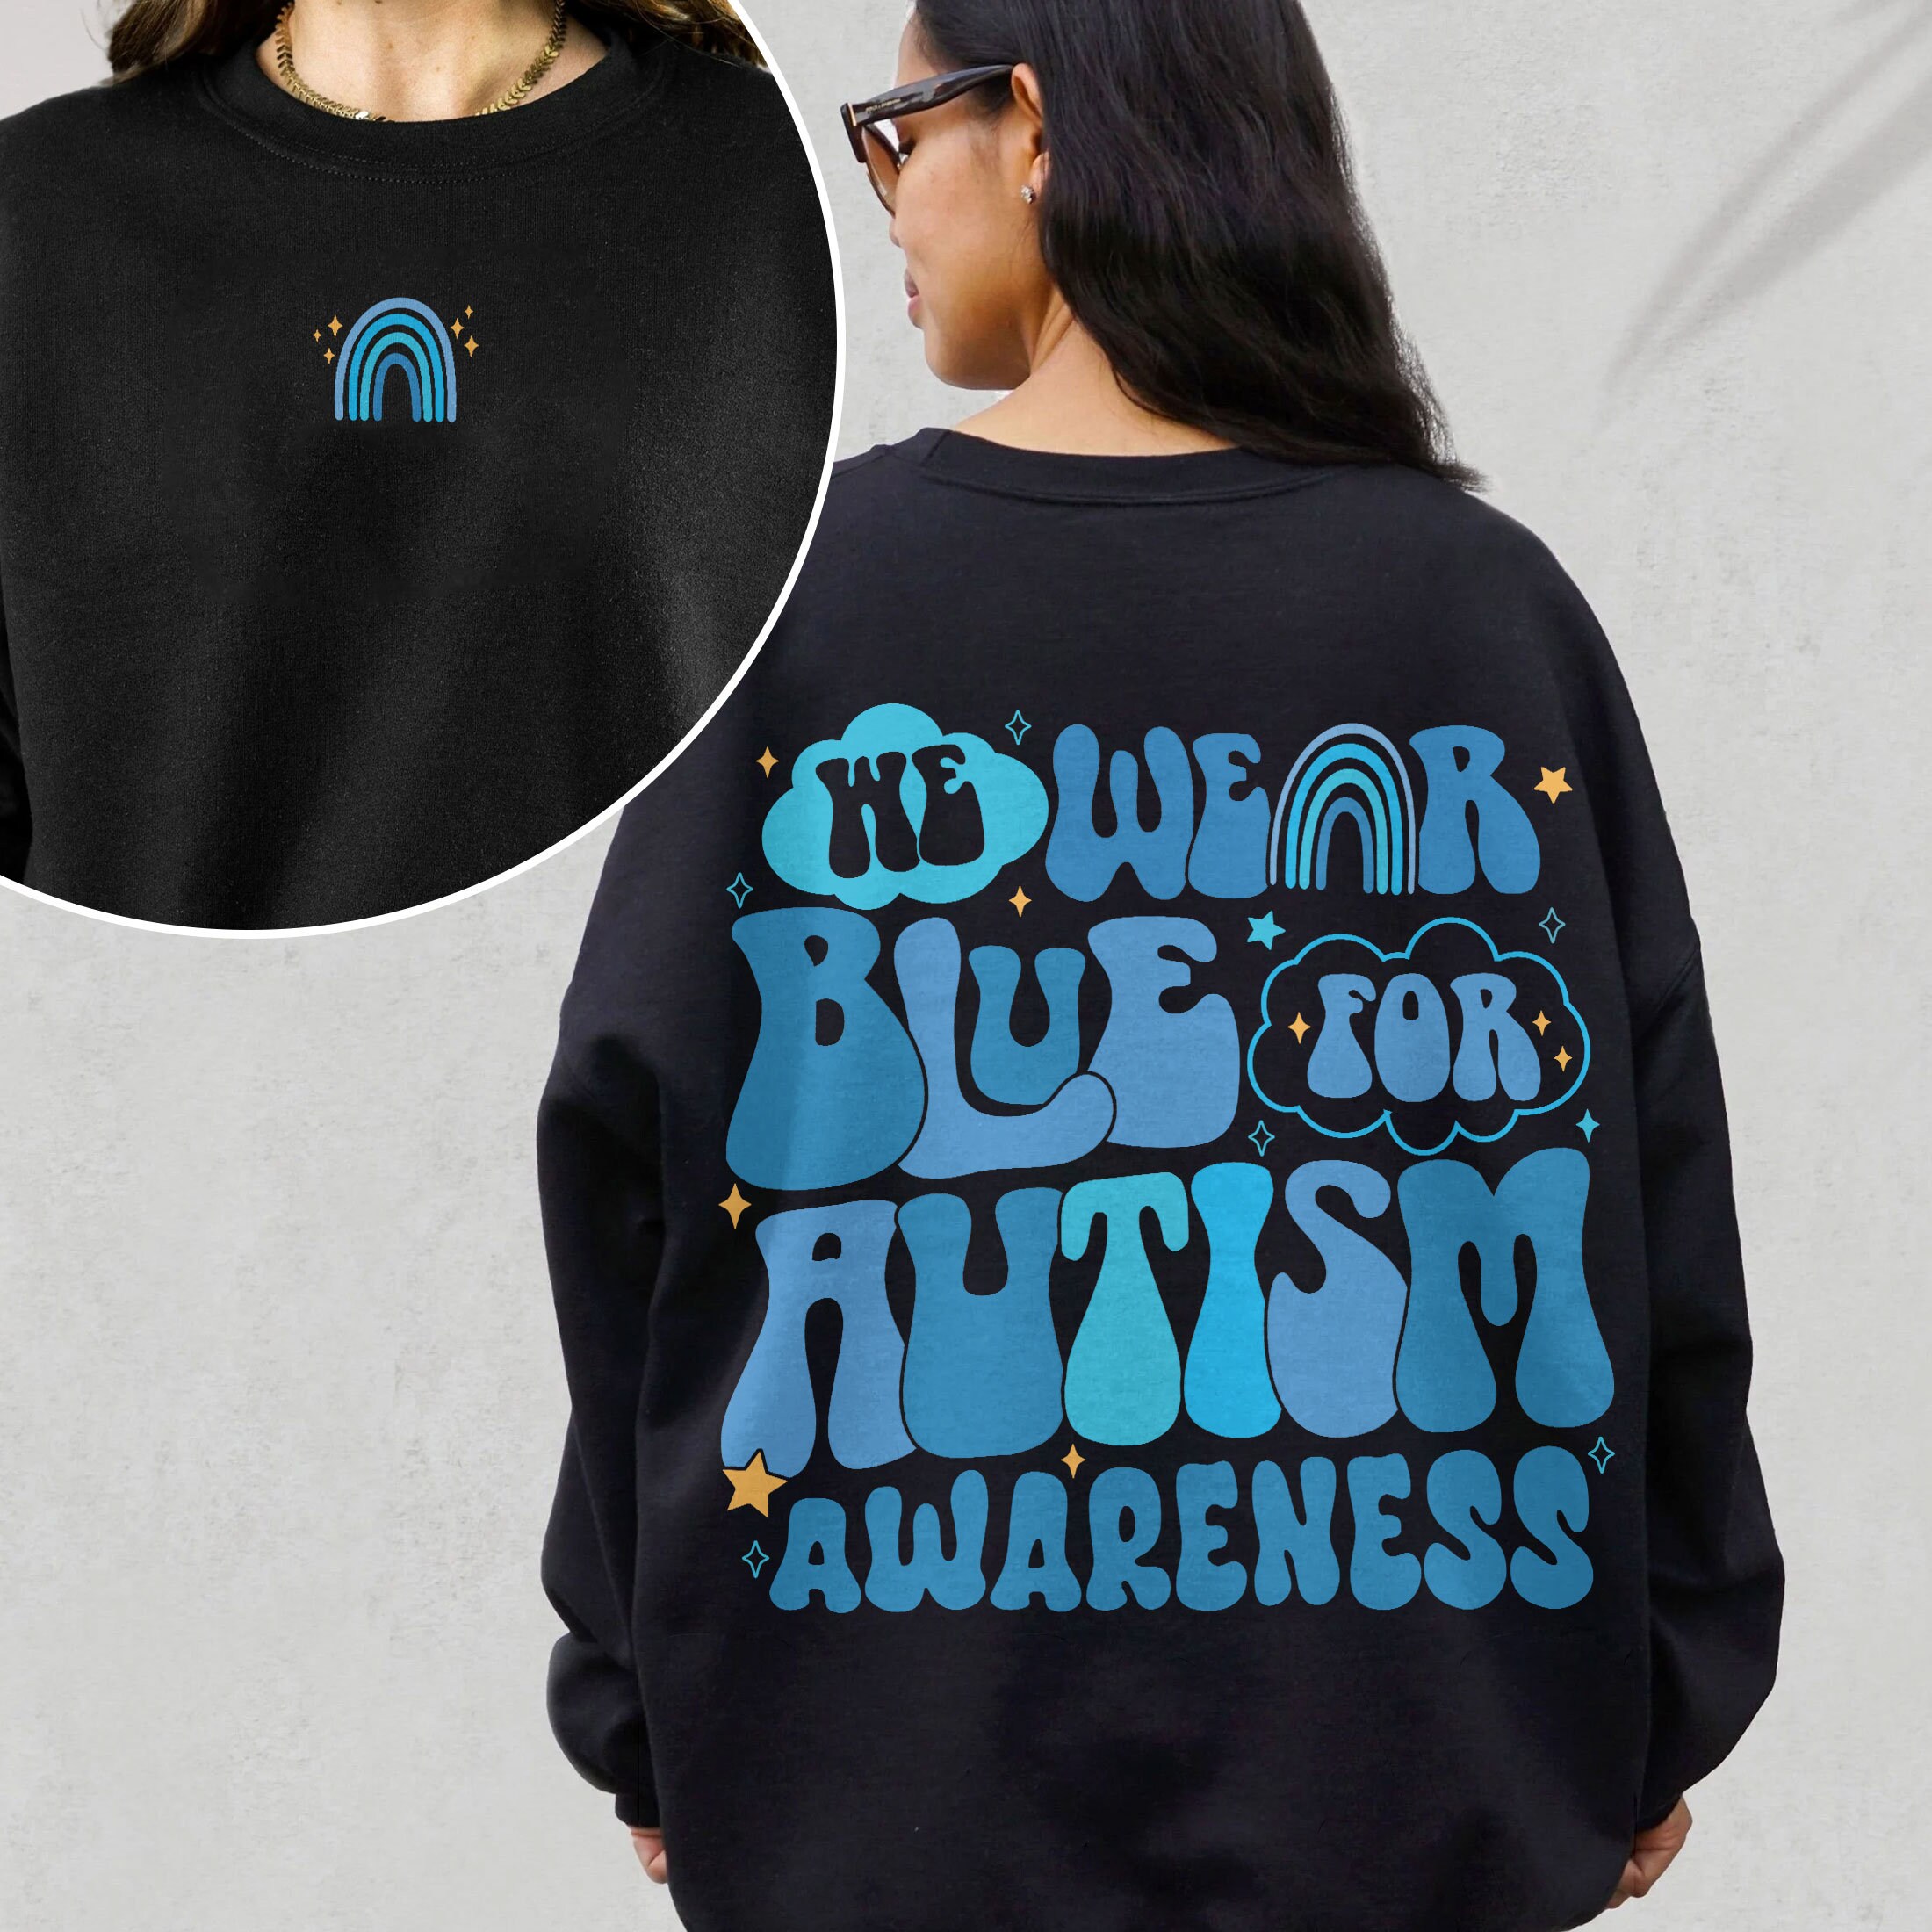 We Wear Blue For Autism Awareness Sweatshirt, In April We Wear Blue